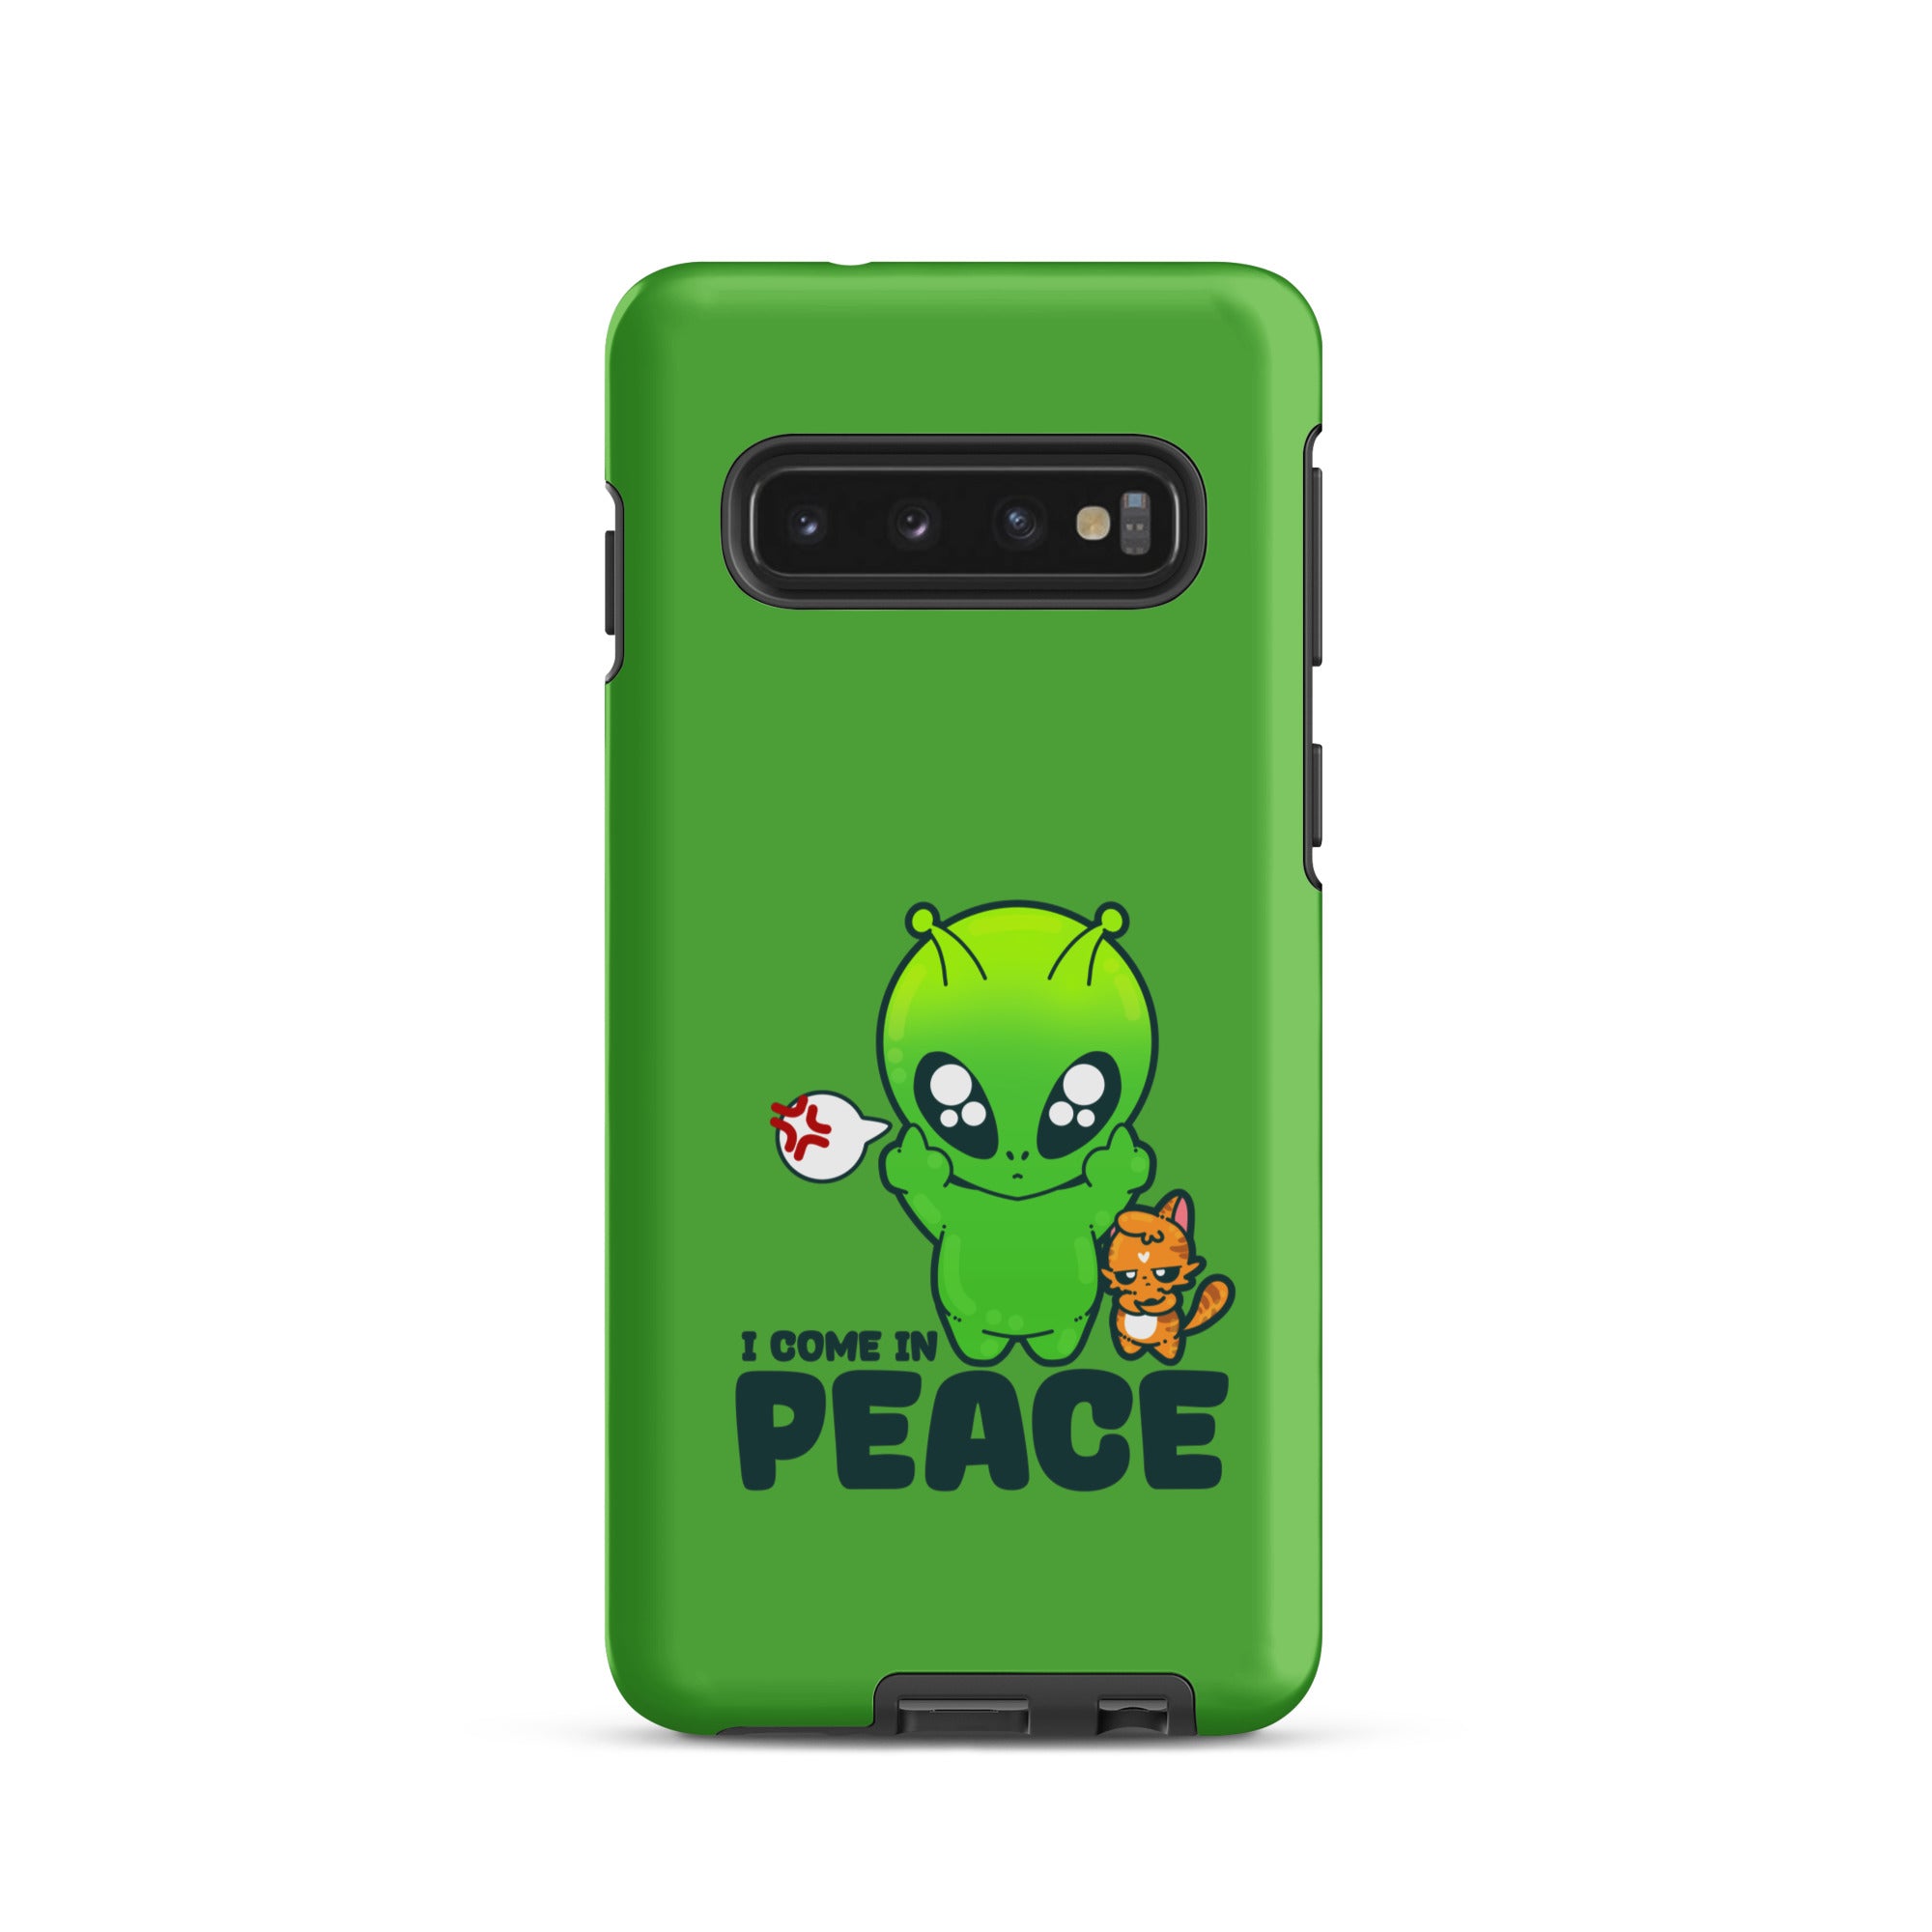 I COME IN PEACE - Tough case for Samsung® - ChubbleGumLLC